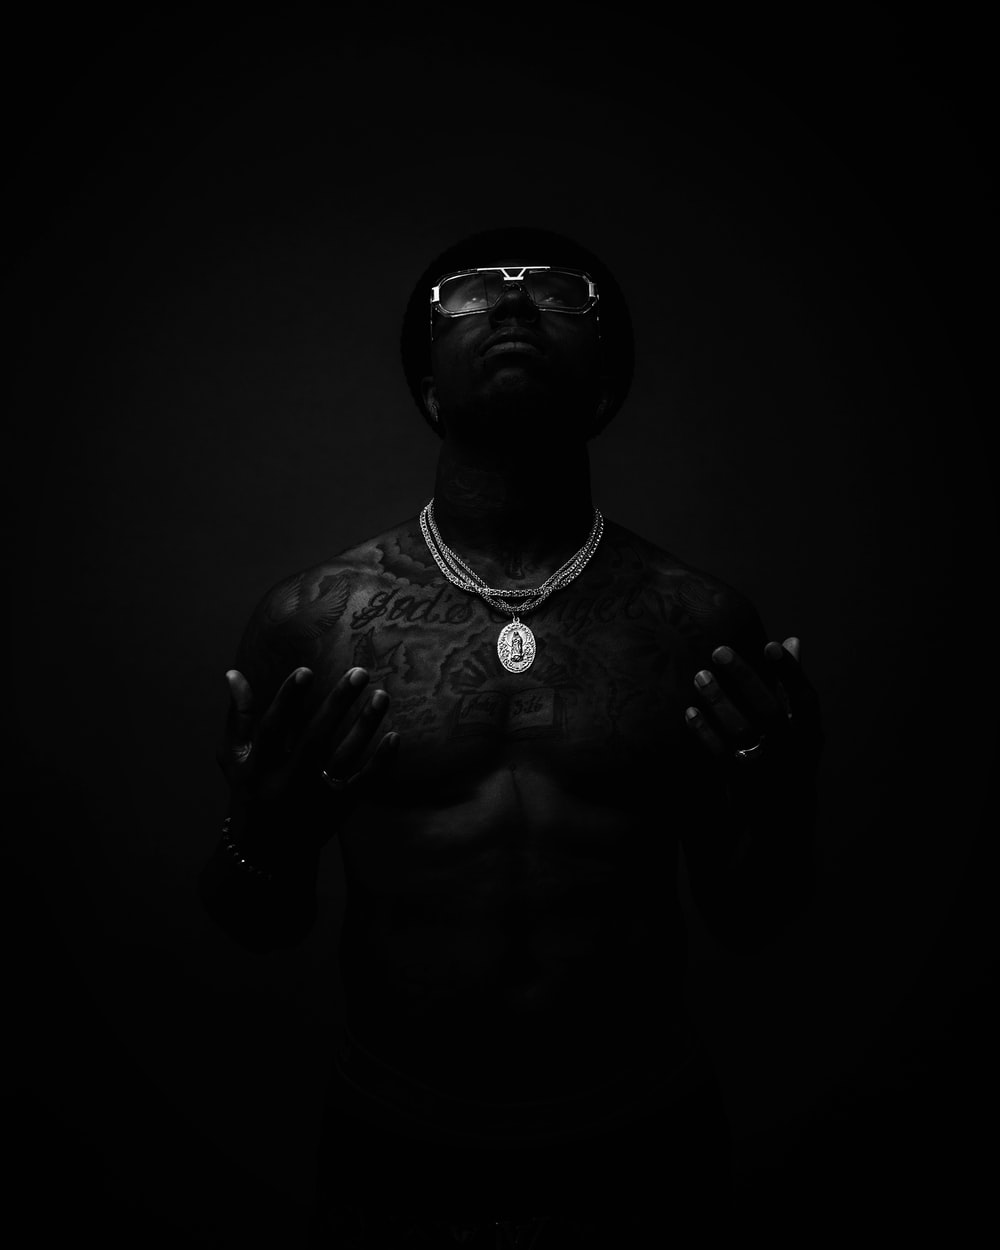 Wallpaper Rapper Black Performance Music Artist Music Background   Download Free Image